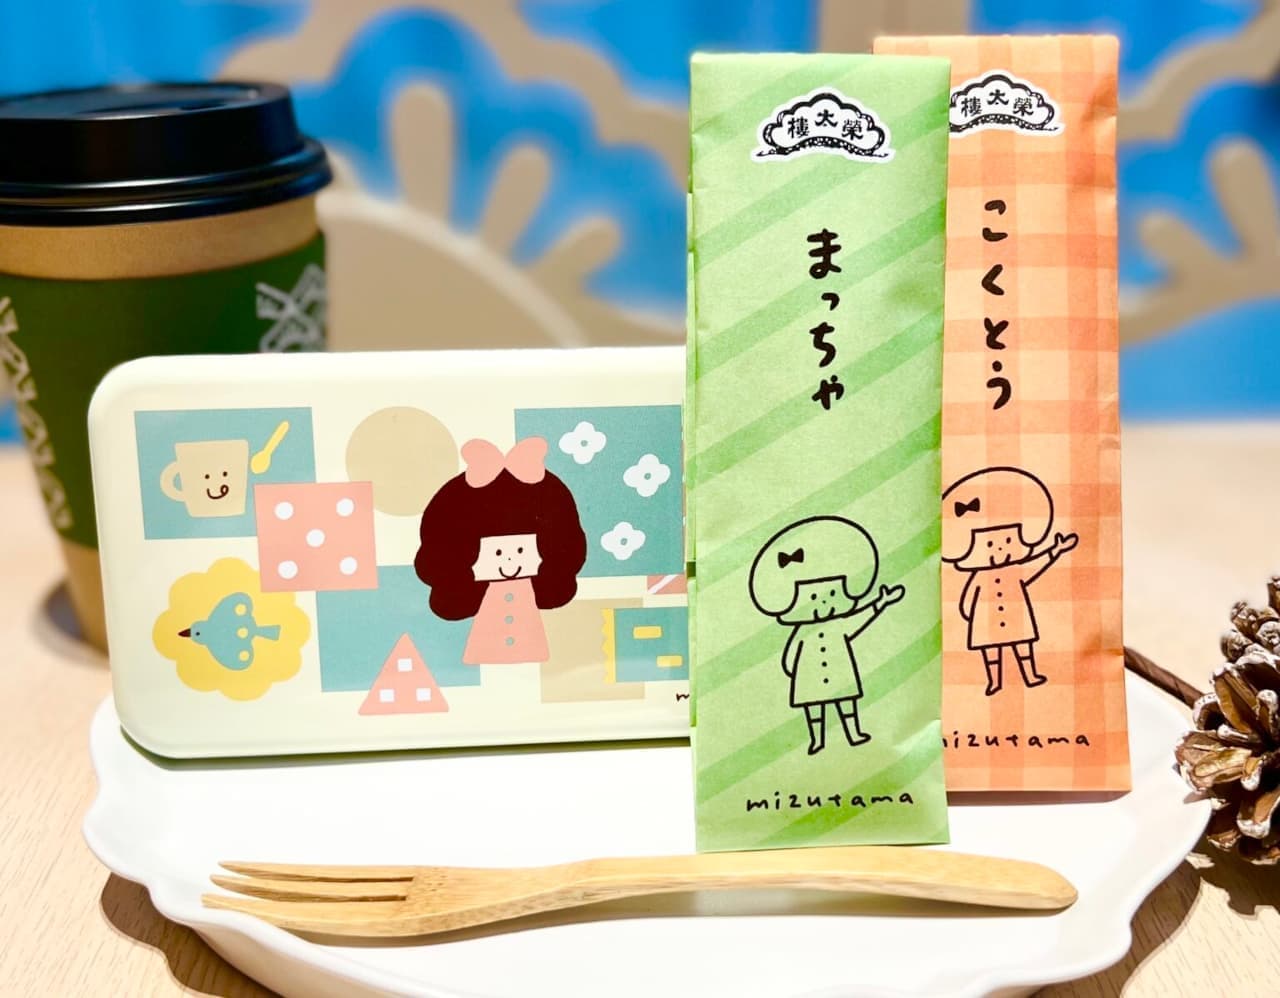 Eitairou Sohonshiro "Rabbit and Girl" "Handful of 2 pieces of Neri Yokan (brown sugar and green powdered tea)